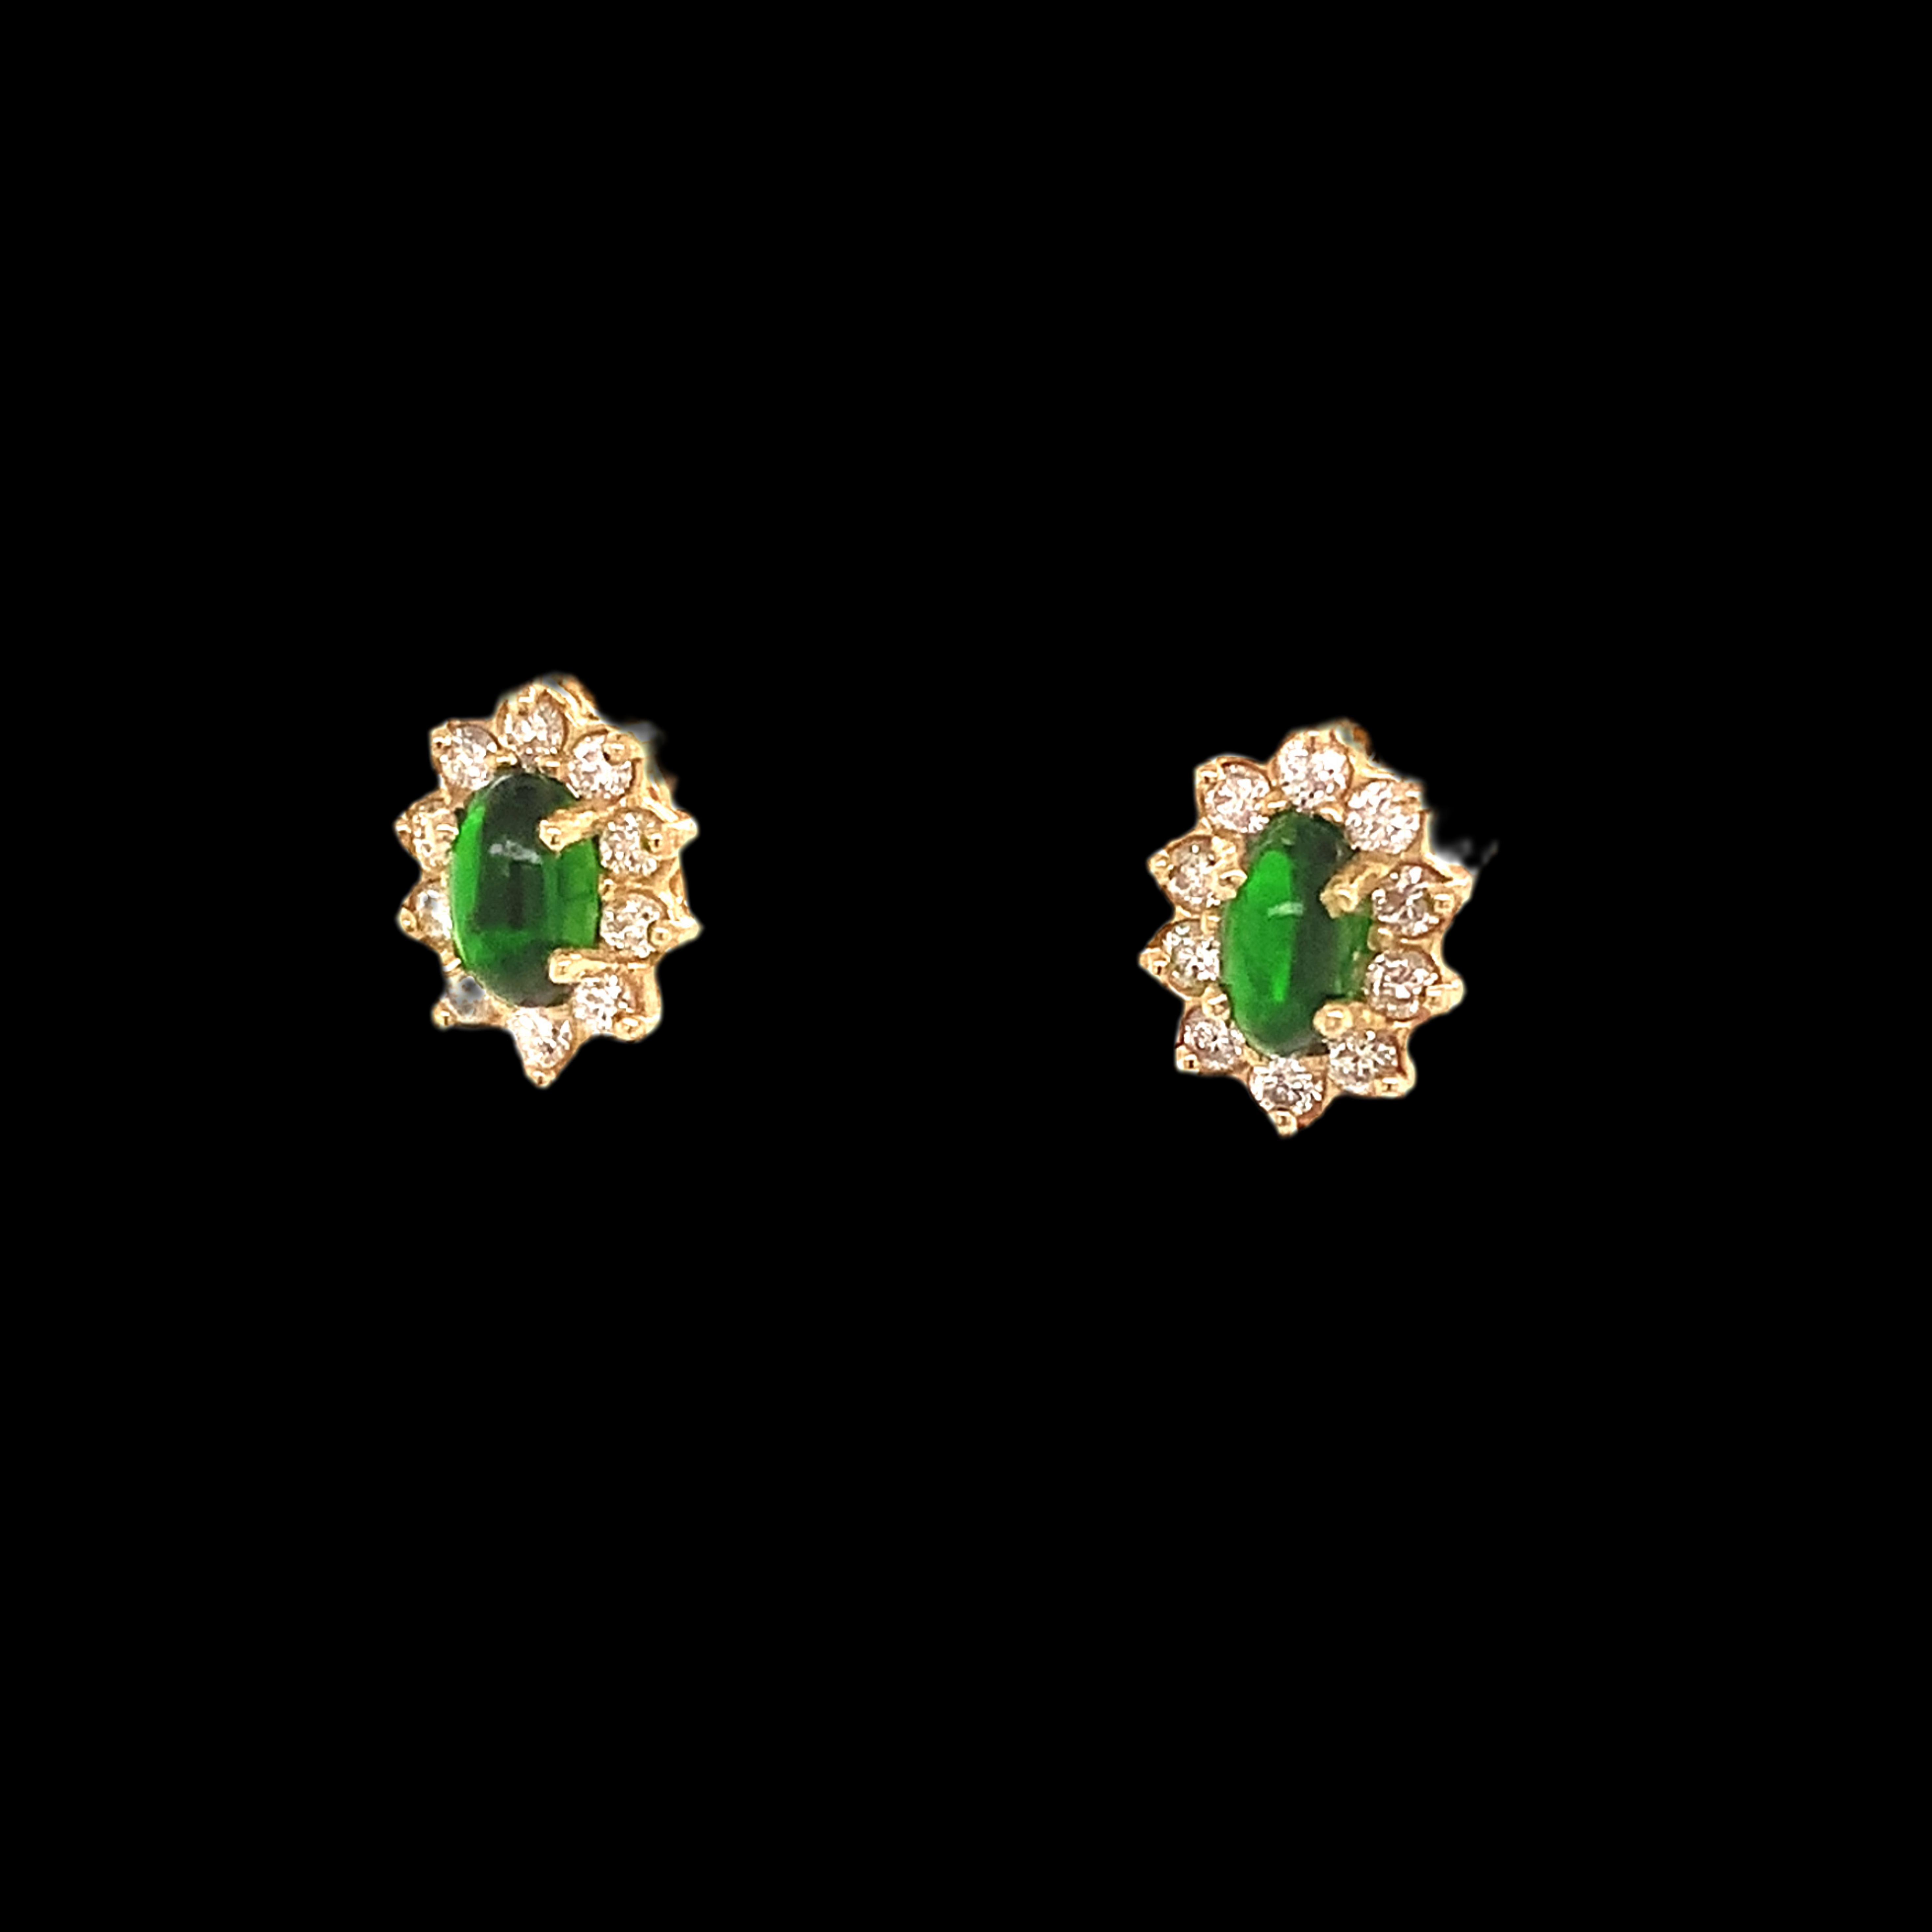 Women's Natural Tourmaline Diamond Earrings 14k Gold 0.85 TCW Certified For Sale